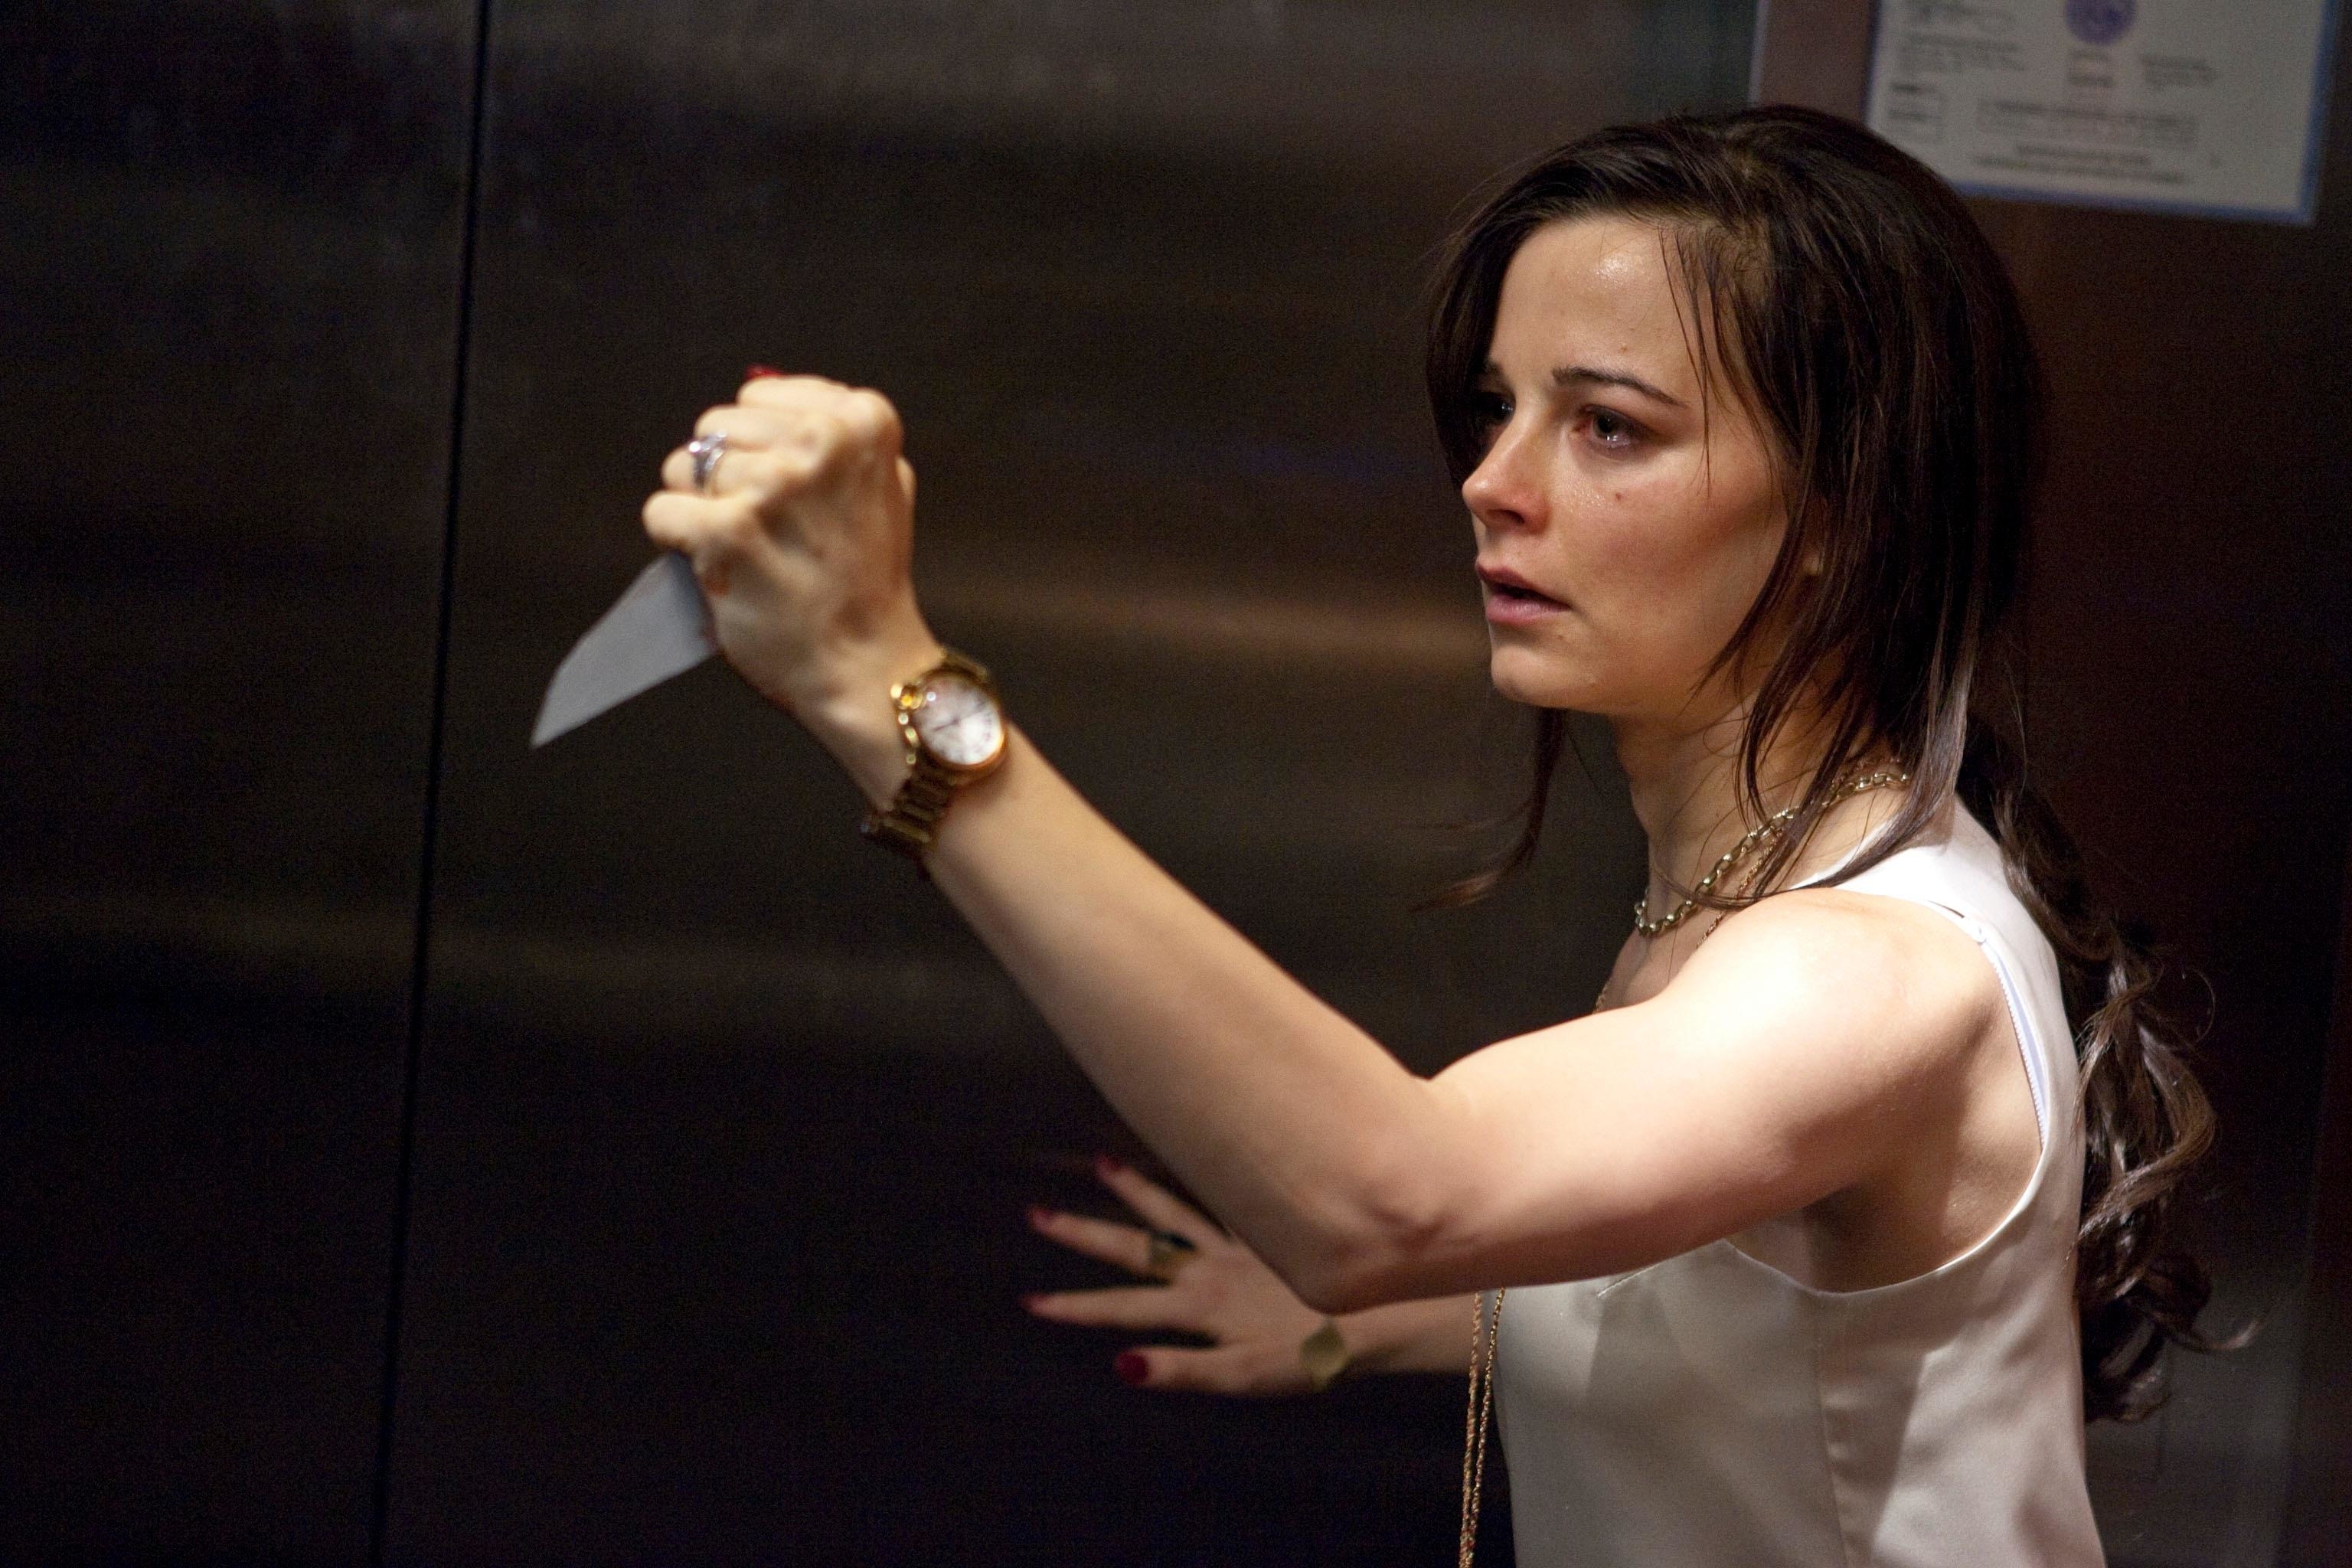 Bojana Novakovic defensively holds a shard of glass on an elevator